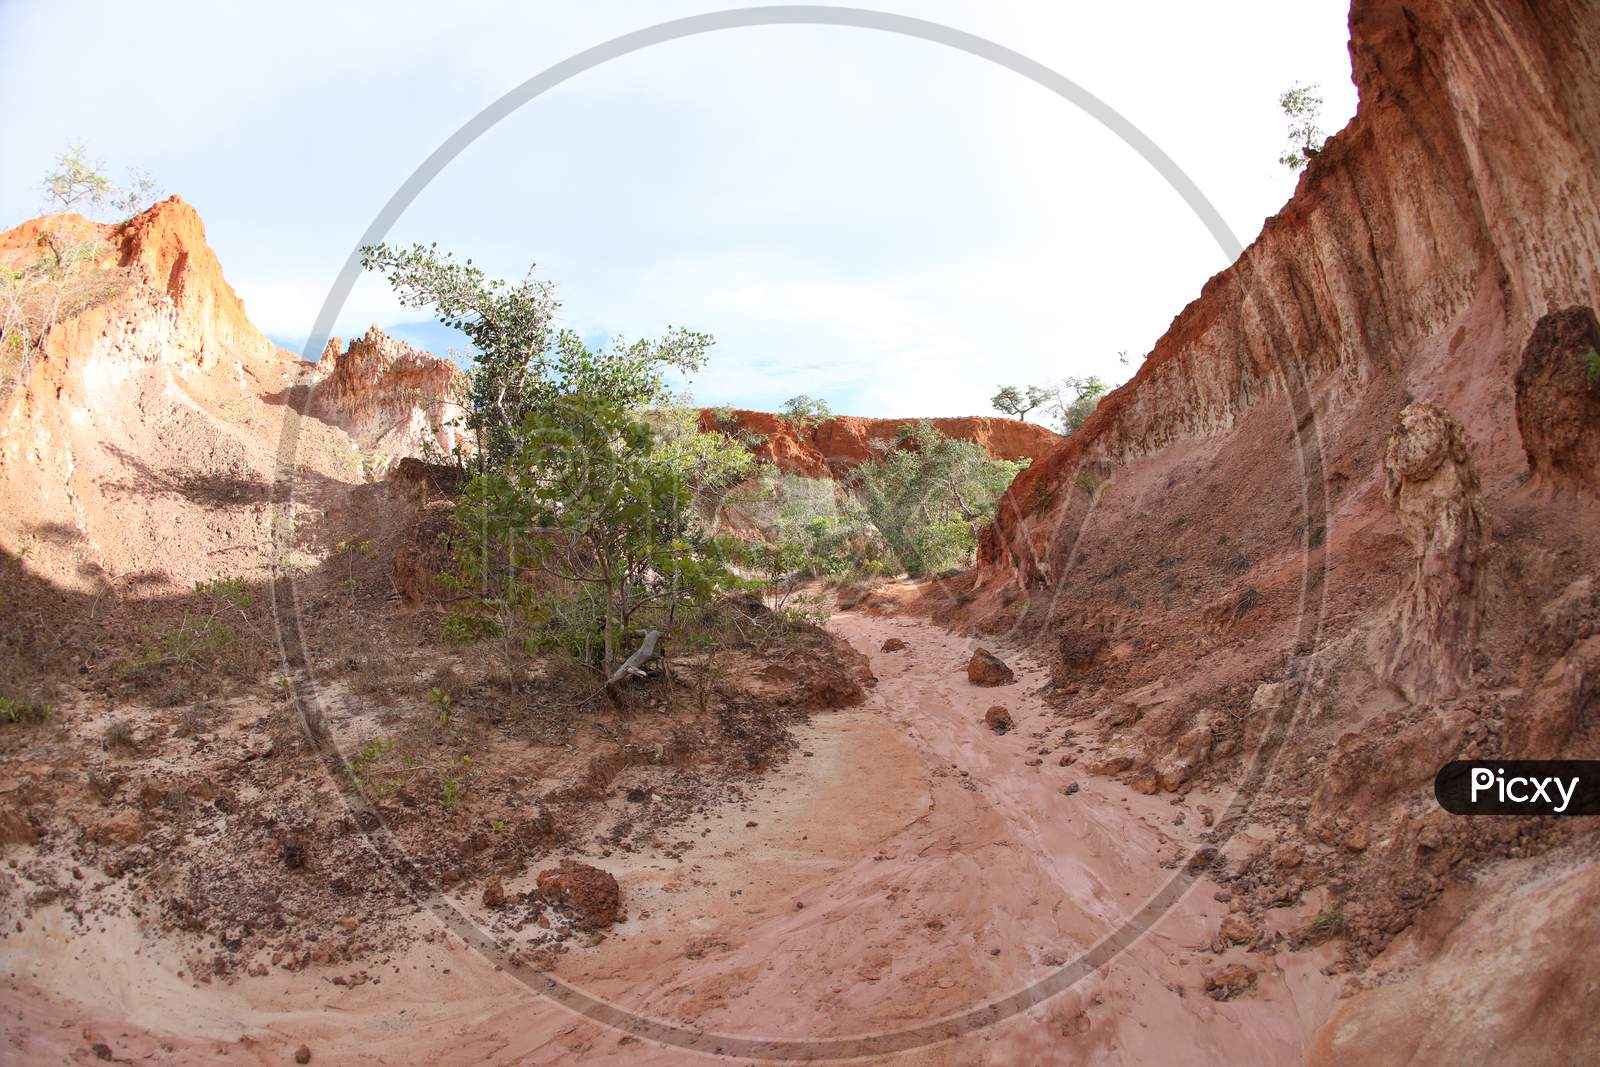 View of the dirt road along the Marafa Grand Canyon in Kenya